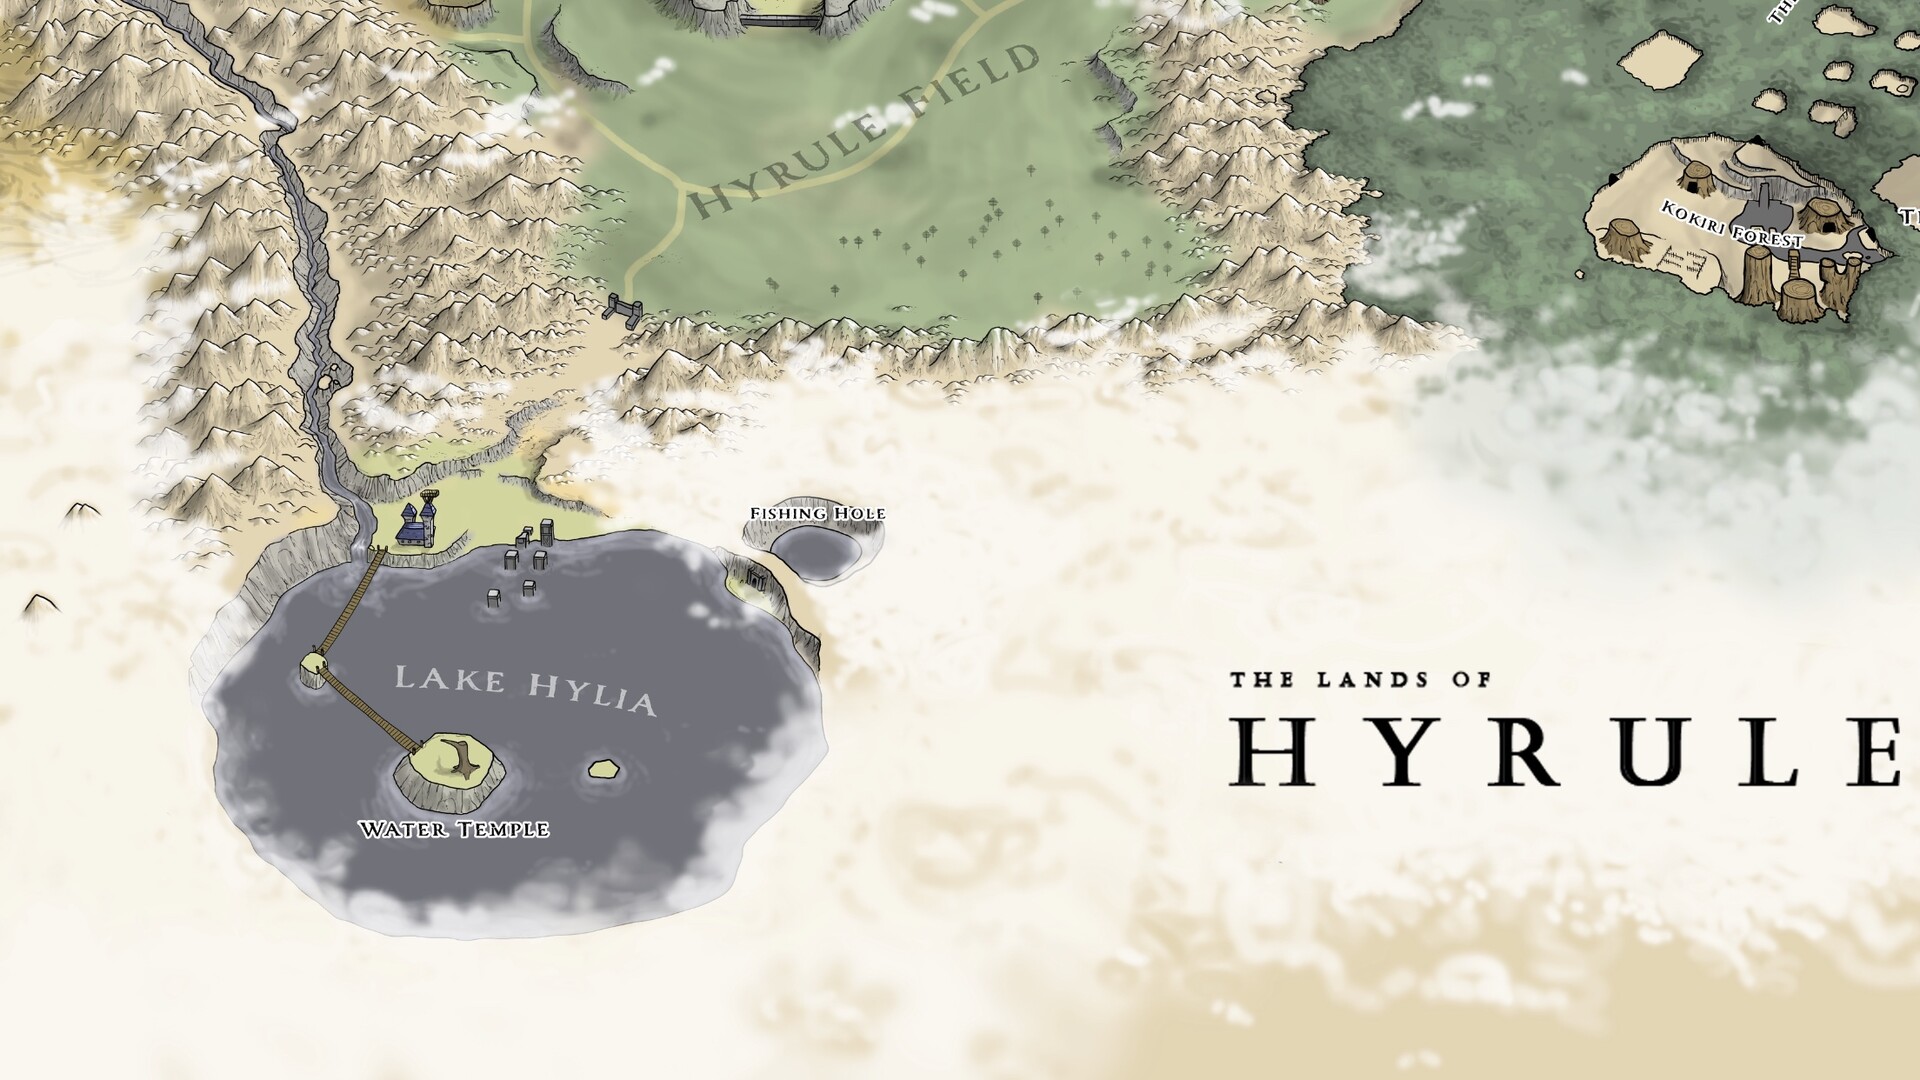 The Legend of Zelda: Ocarina of Time Hyrule World Map 